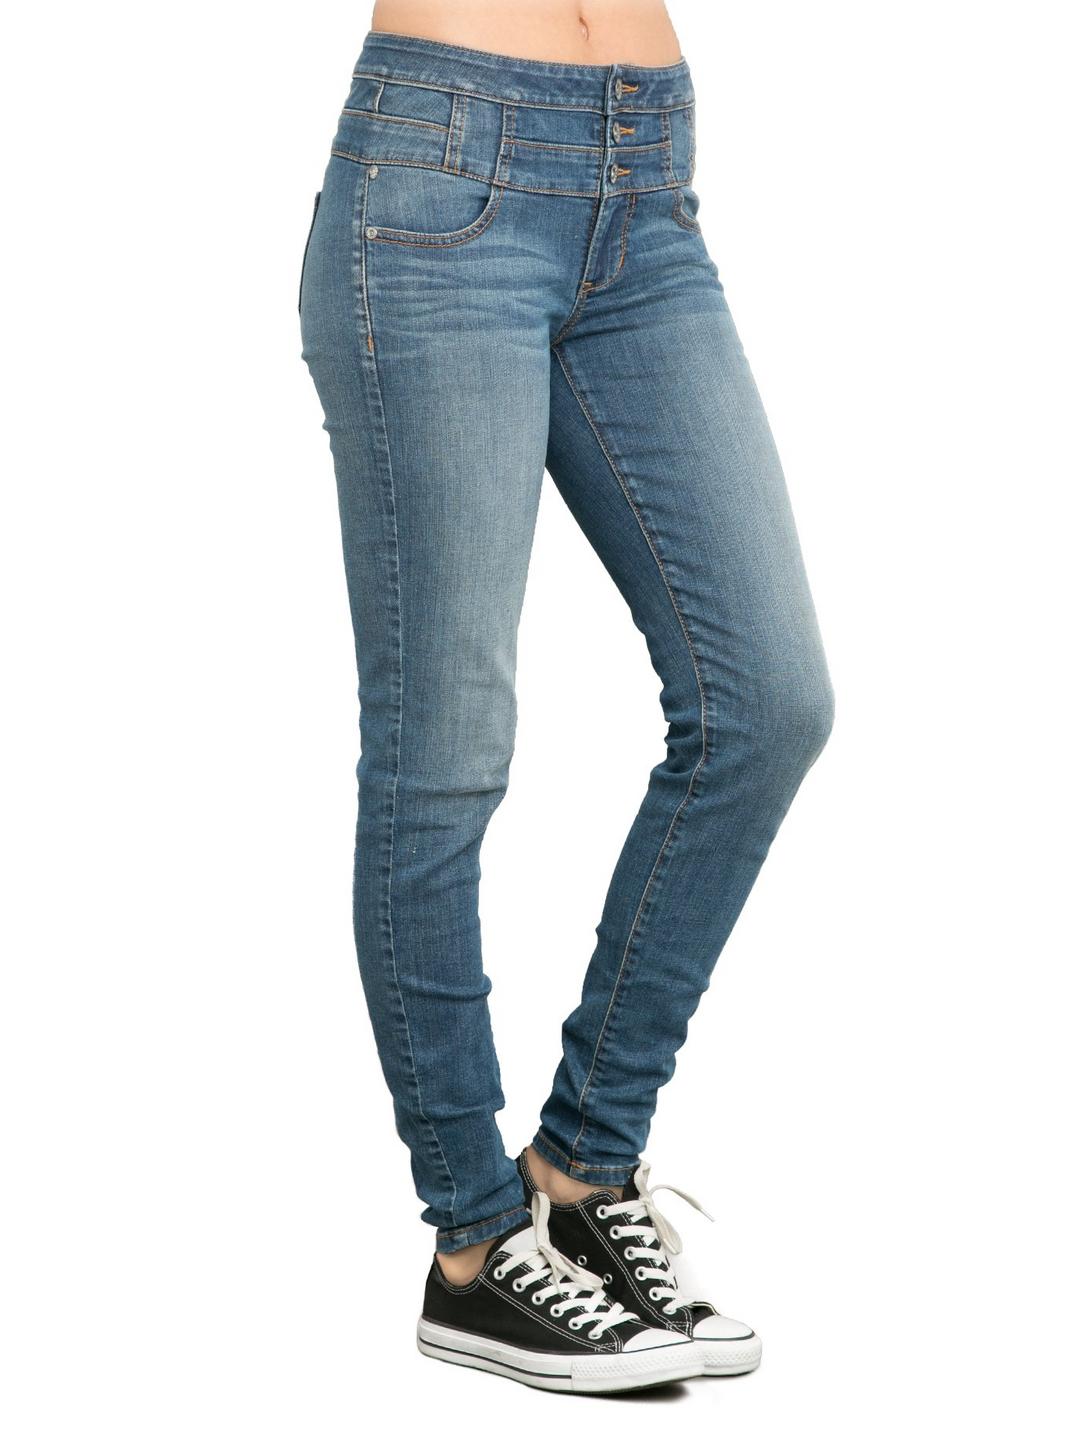 LOVEsick Medium Indigo High-Waisted Skinny Jeans, DARK BLUE, hi-res